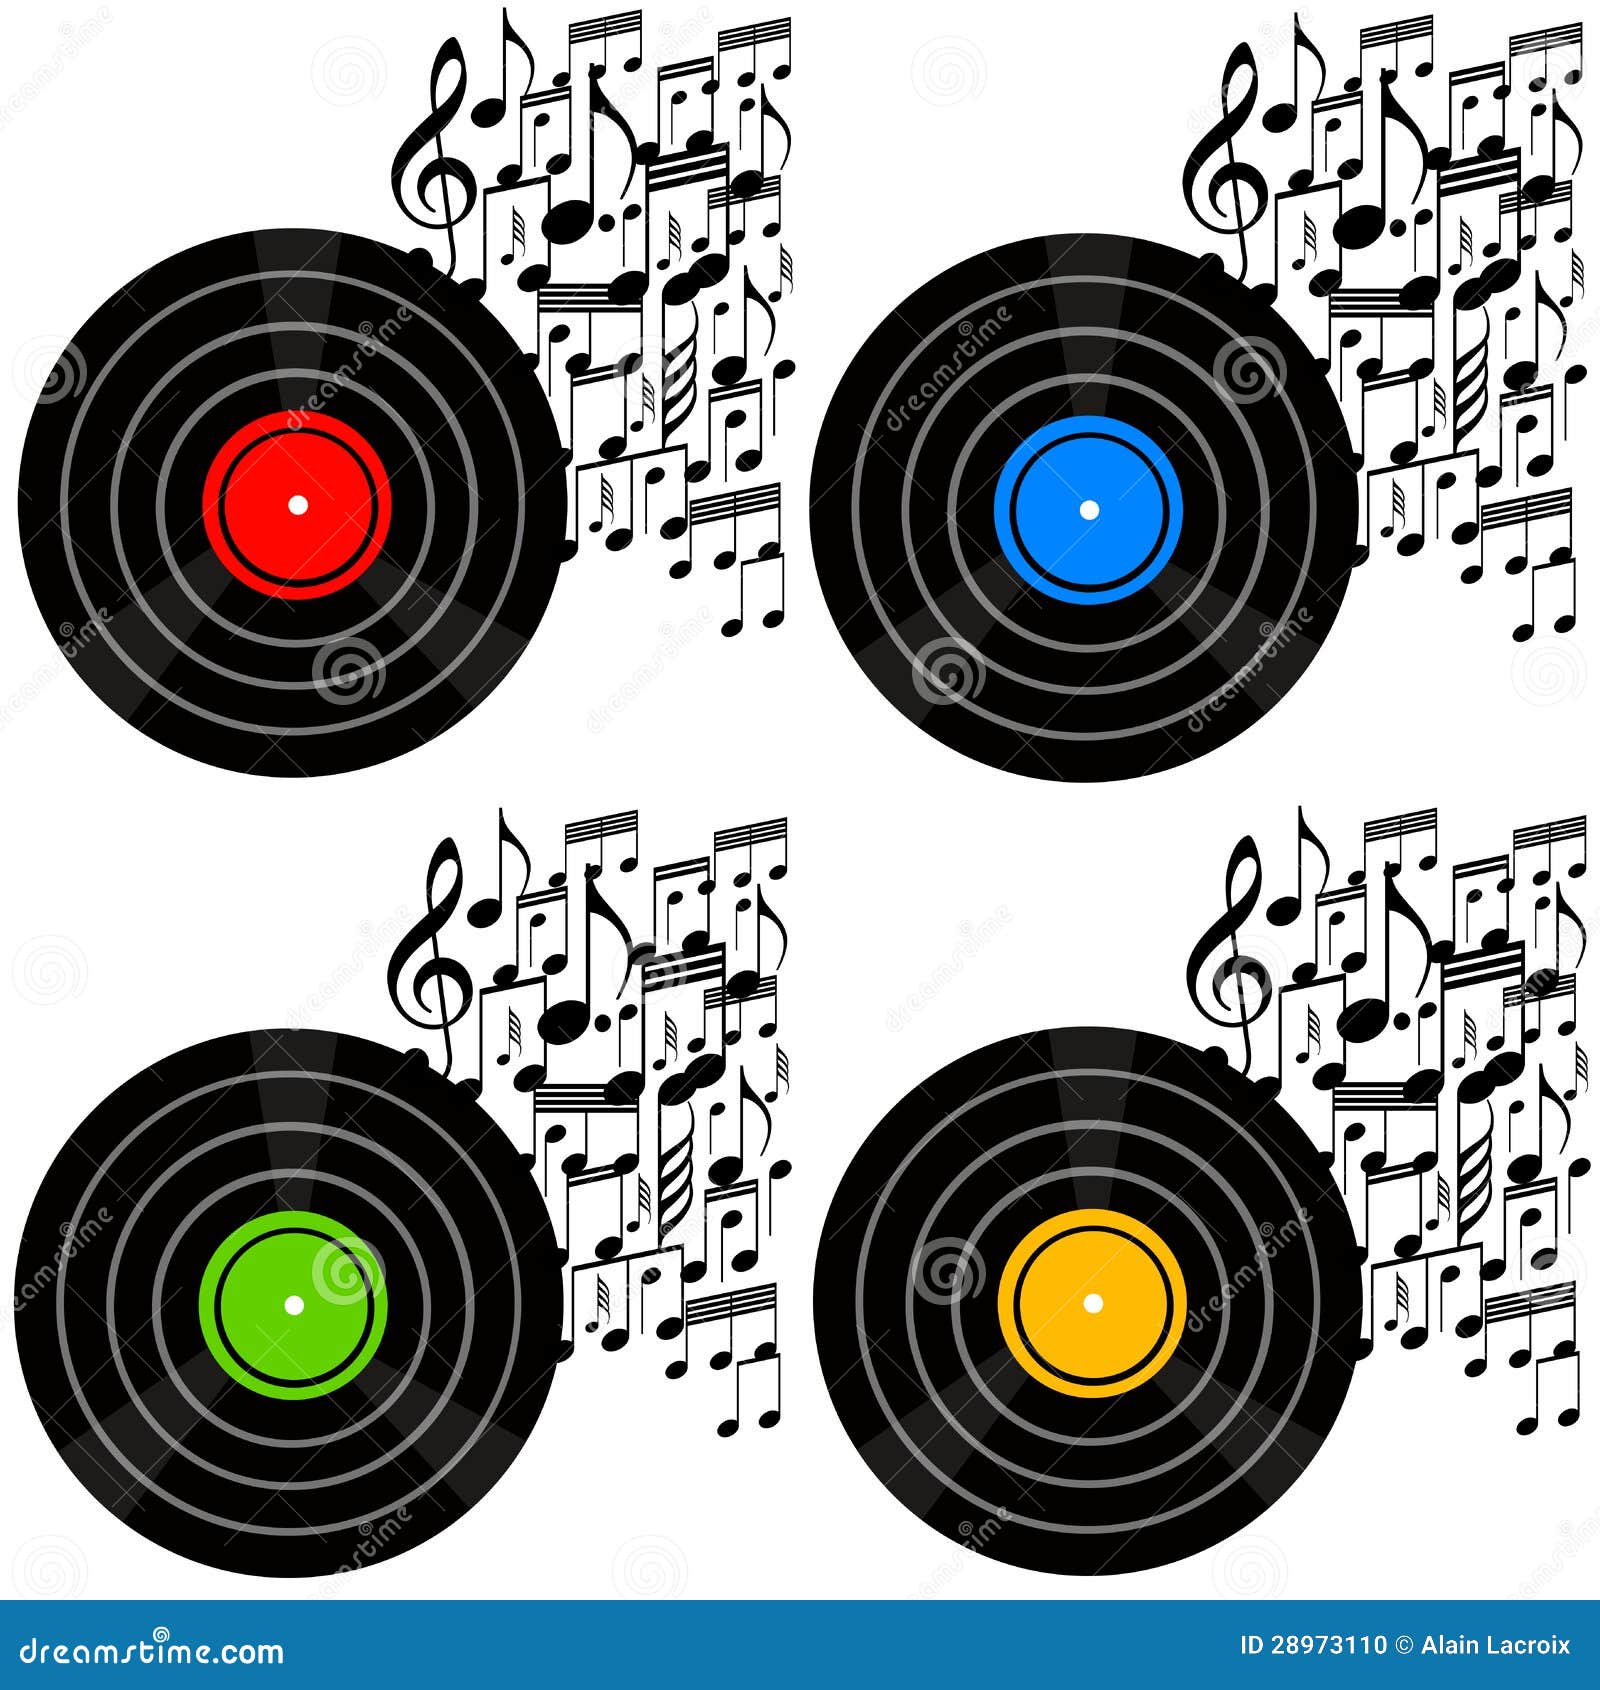 Music stock illustration. Illustration of harmonies, grunge - 28973110